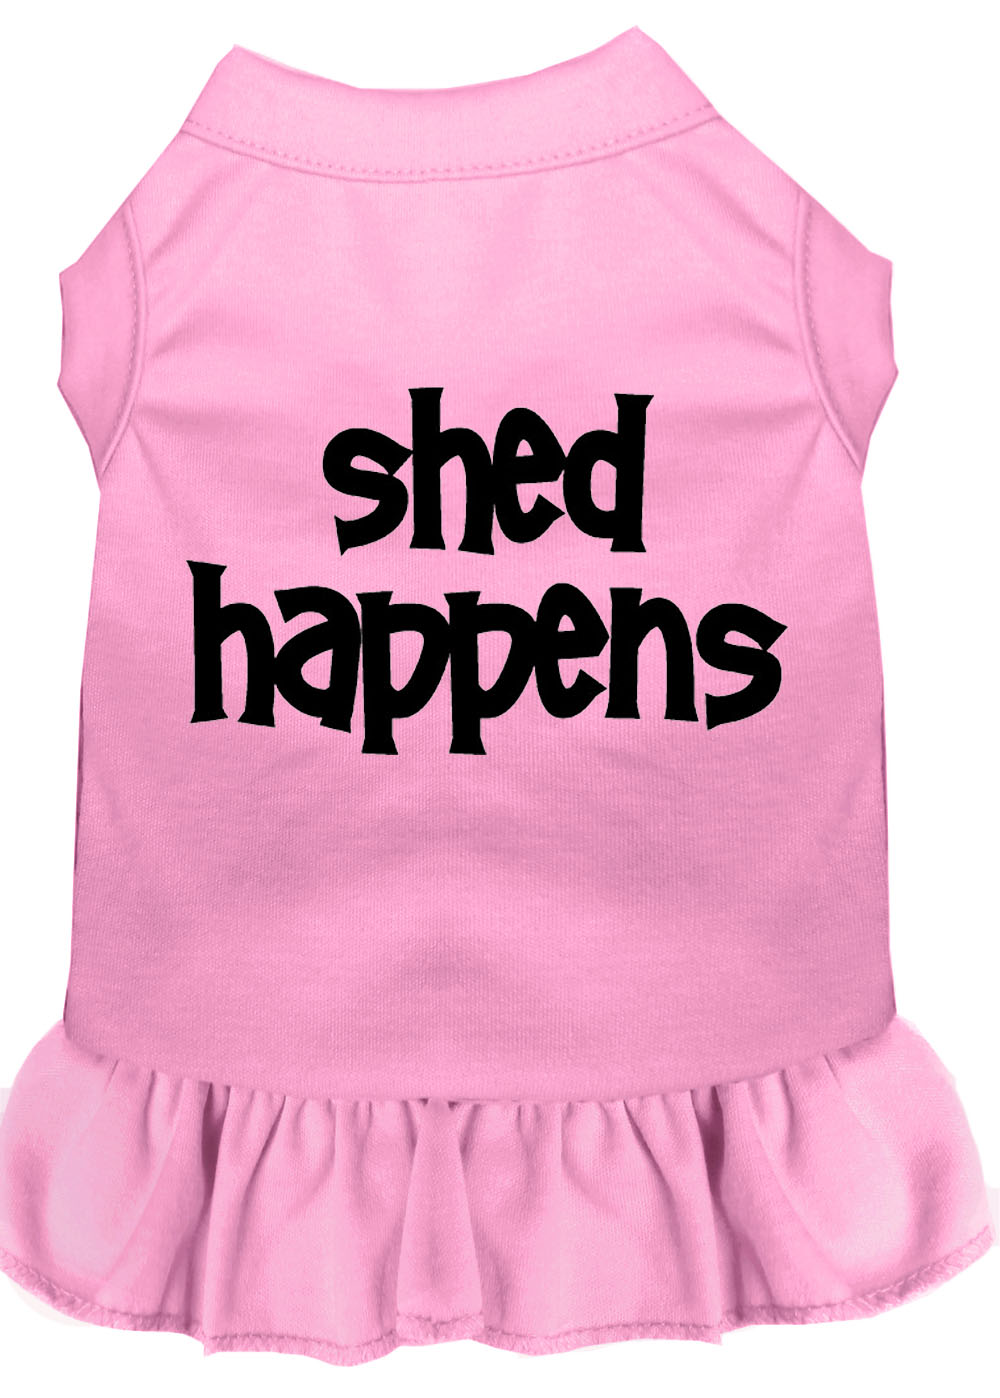 Shed Happens Screen Print Dress Light Pink Sm GreatEagleInc